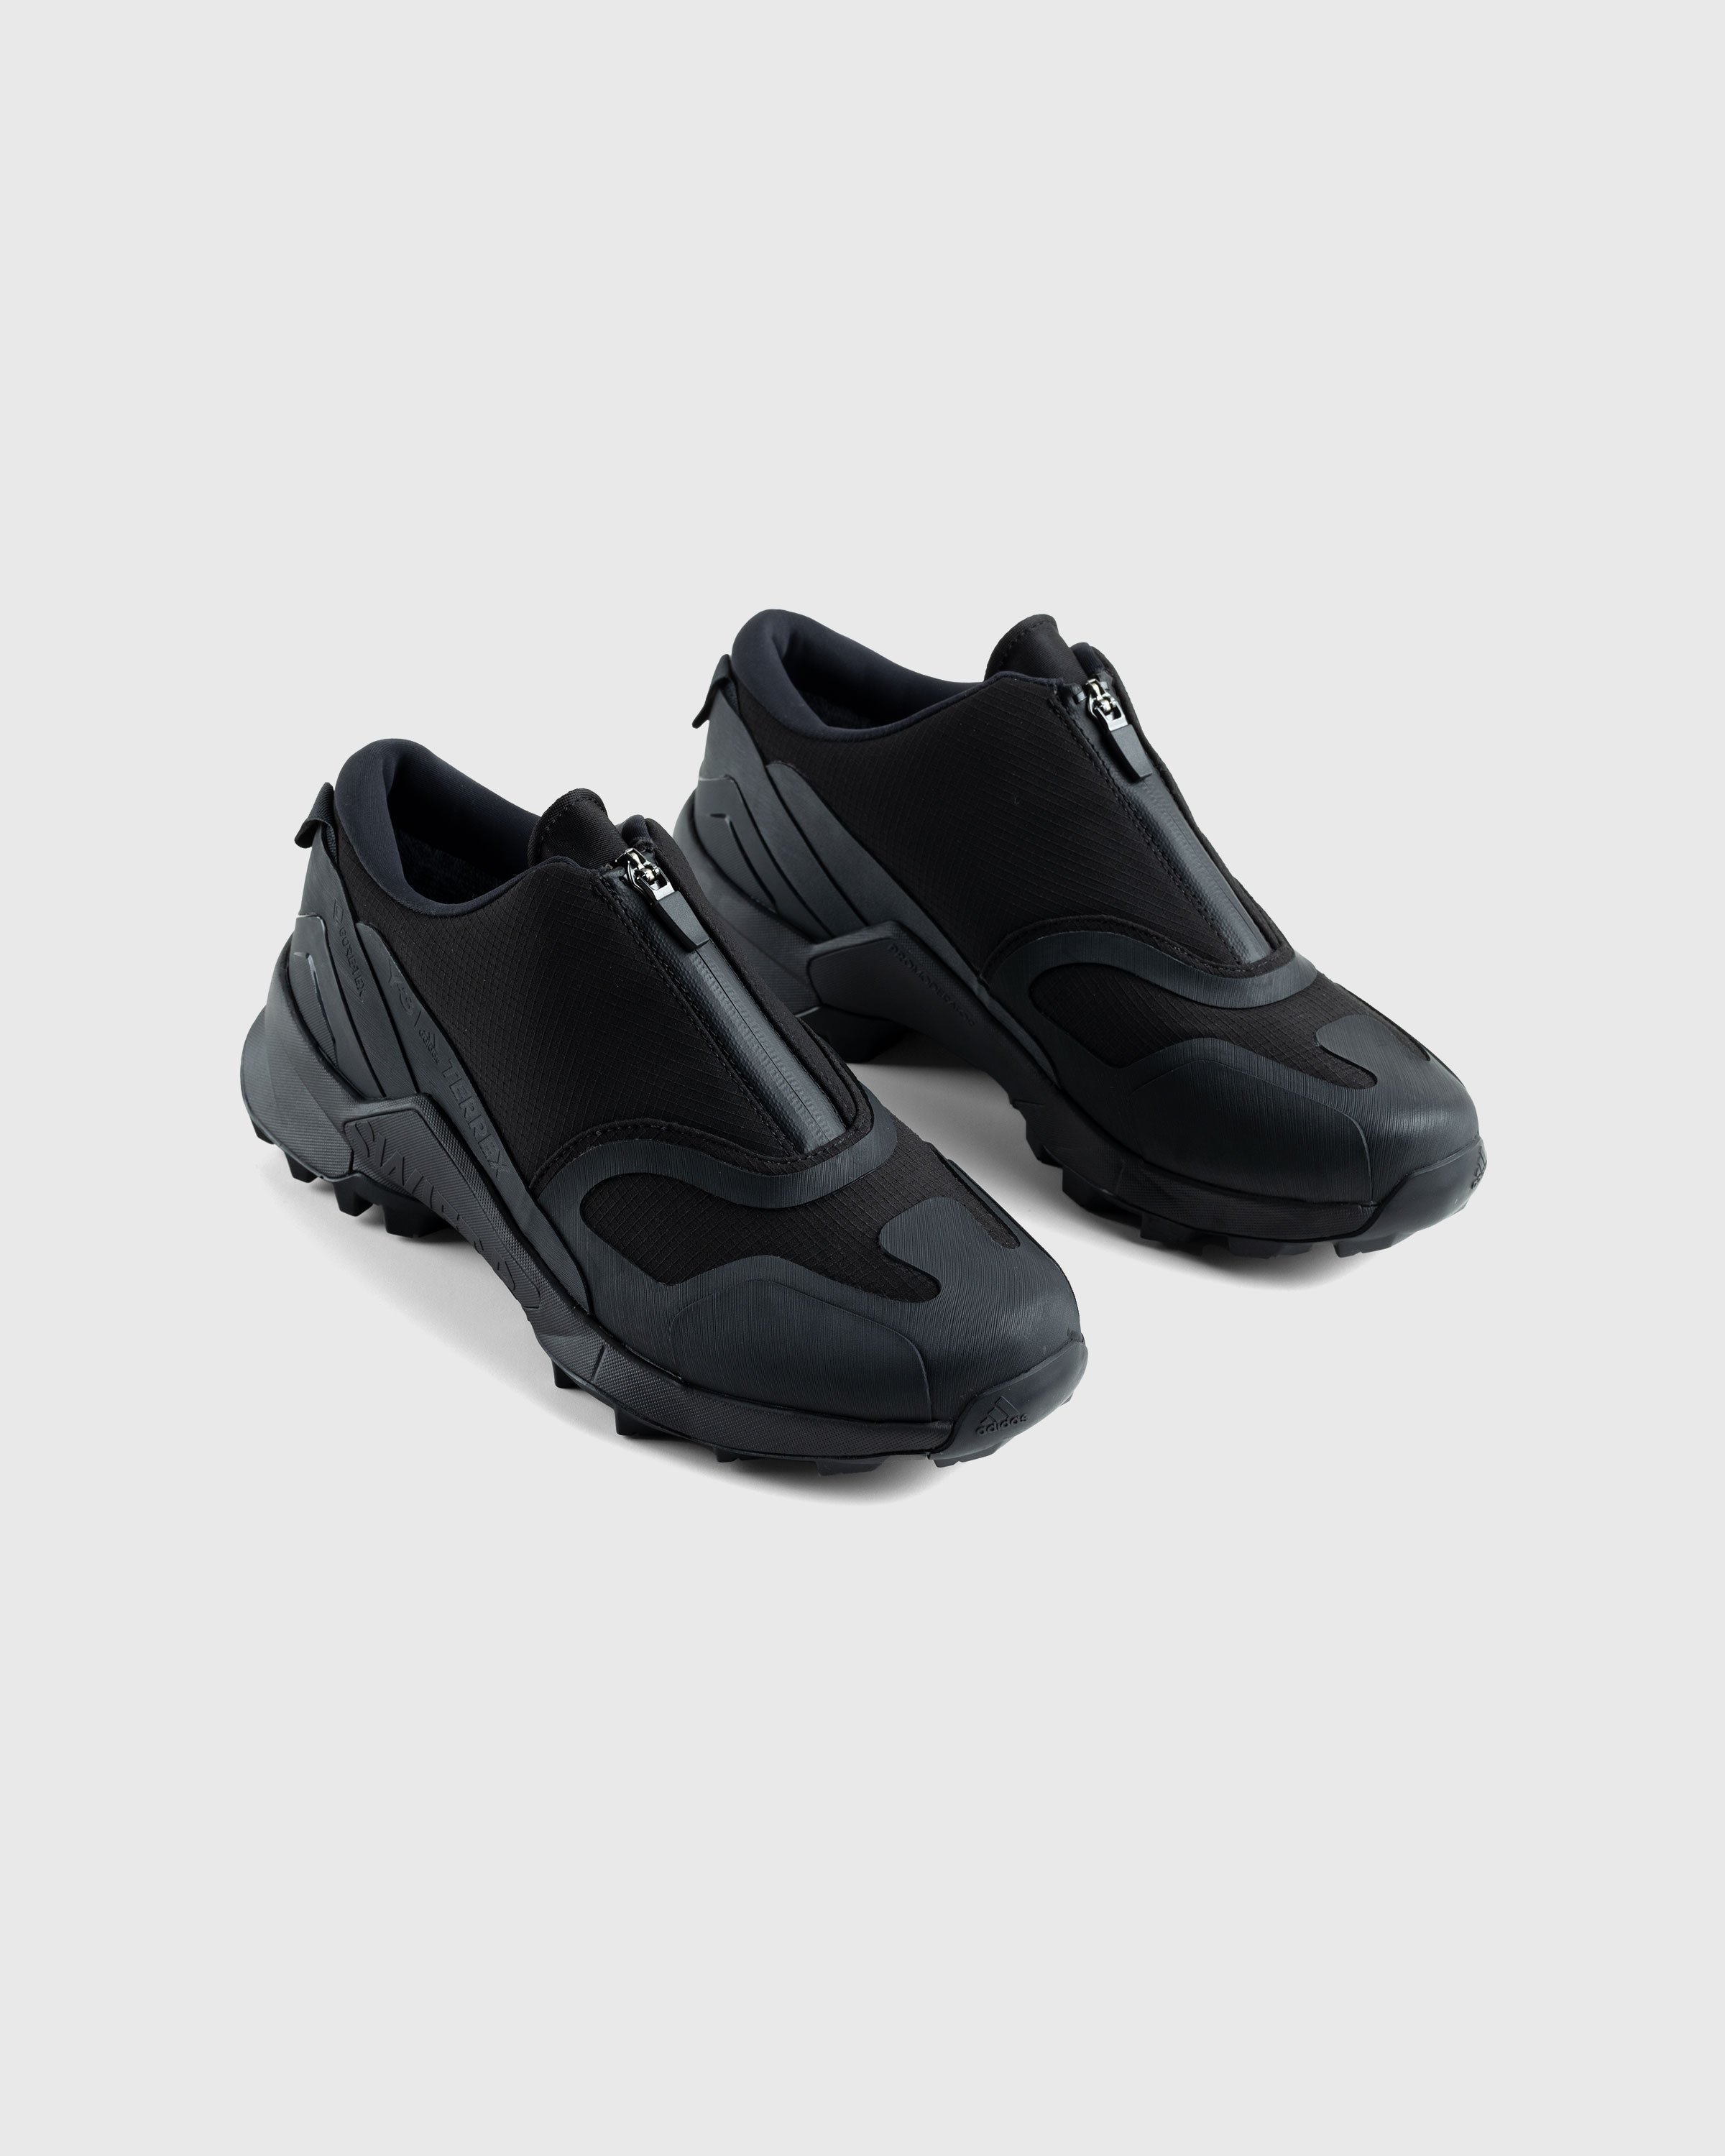 Y-3 - Terrex Swift R3 GORE-TEX - Footwear - Black - Image 3